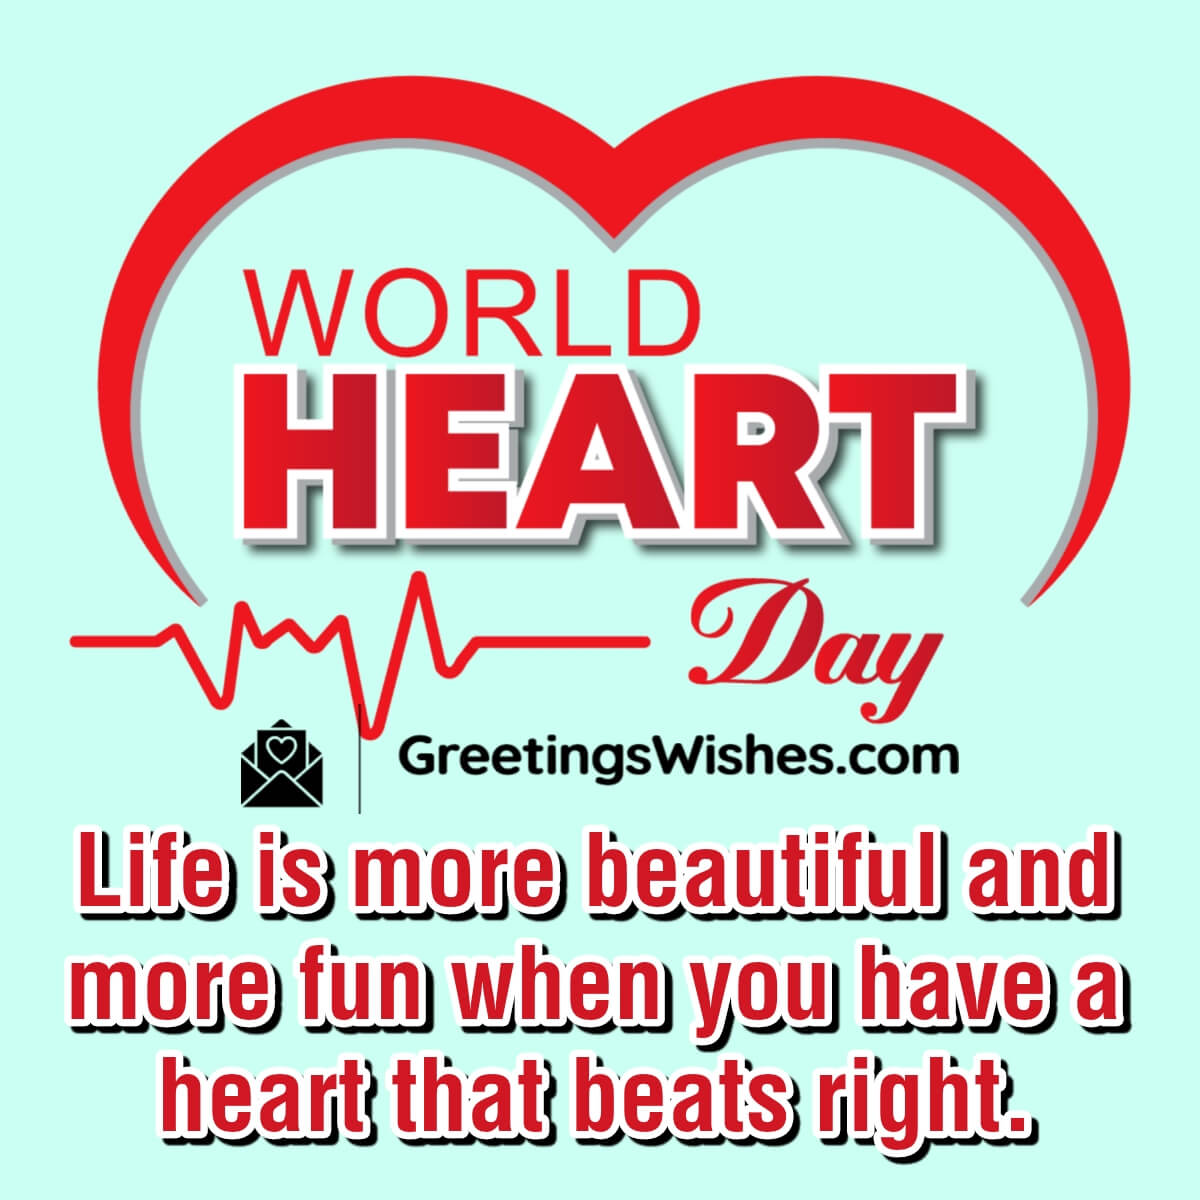 World Heart Day Greeting